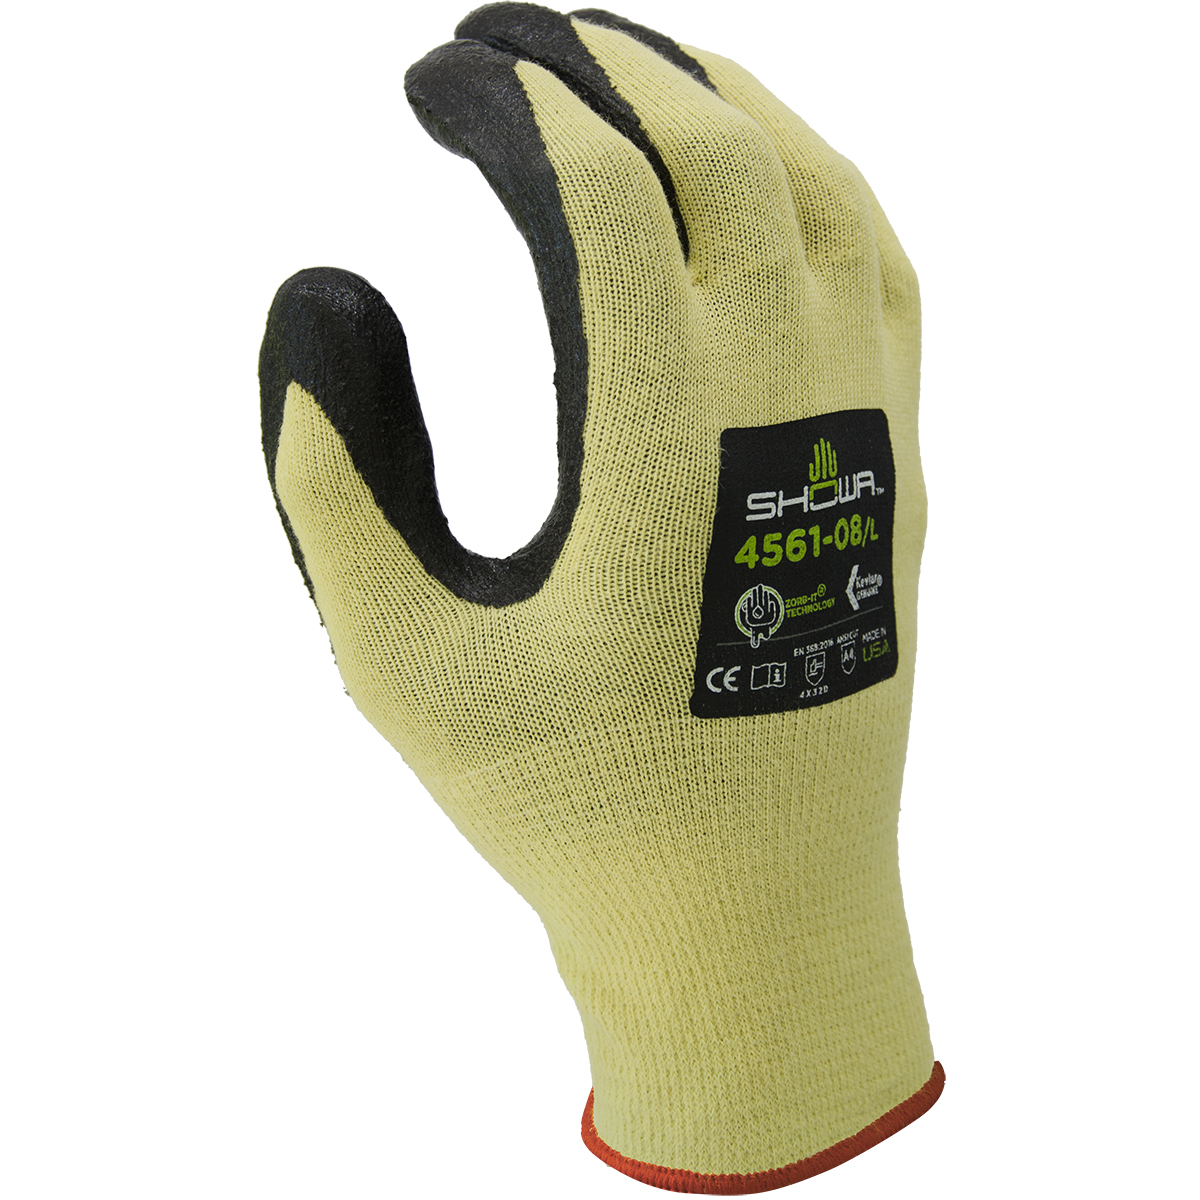 Cut resistant, sponge nitrile palm w/Zorb-IT technology, 15 gauge seamless knit made Kevlar®, yellow w/black dip,  ANSI CUT LEVEL A4/large - Cut Resistant